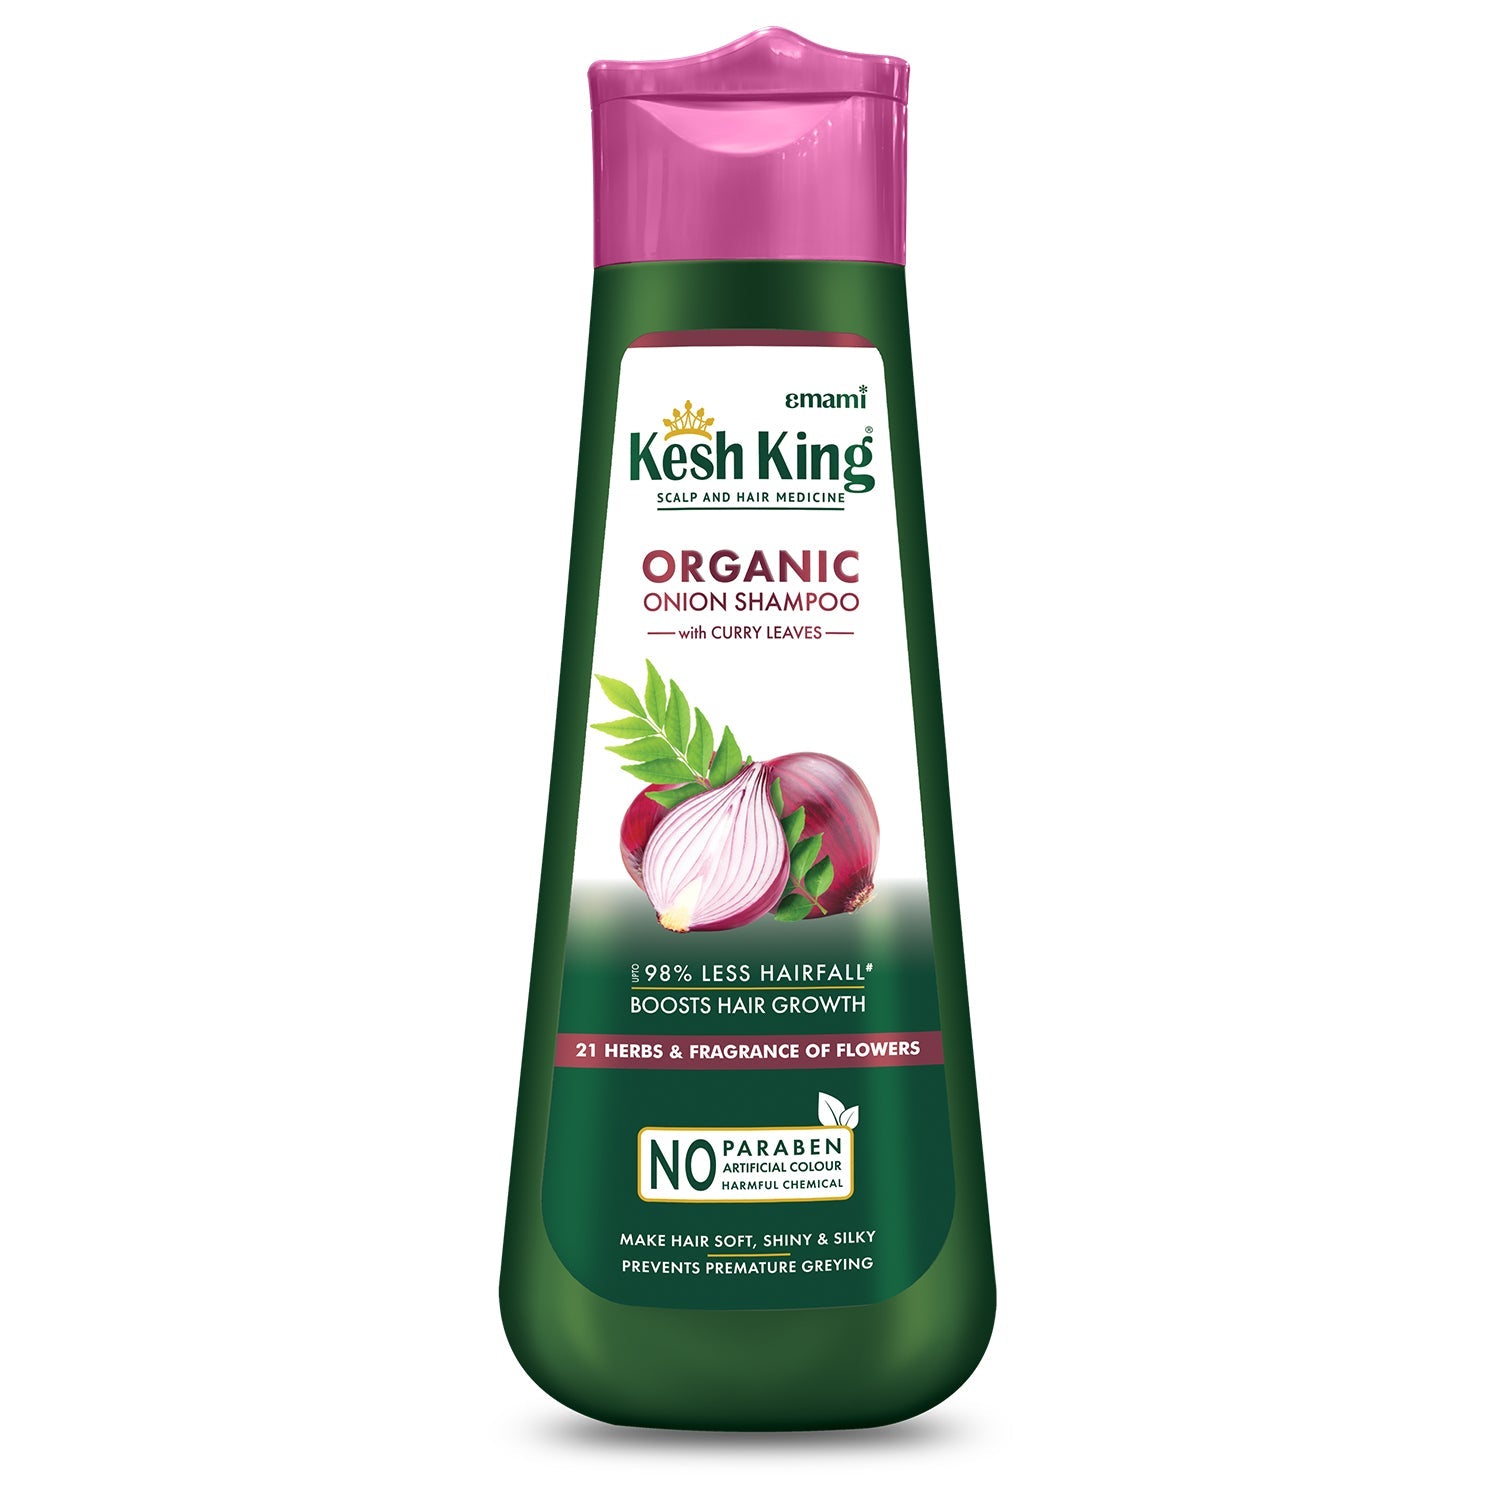 Kesh King Organic Onion Shampoo With Curry Leaves - 300ml